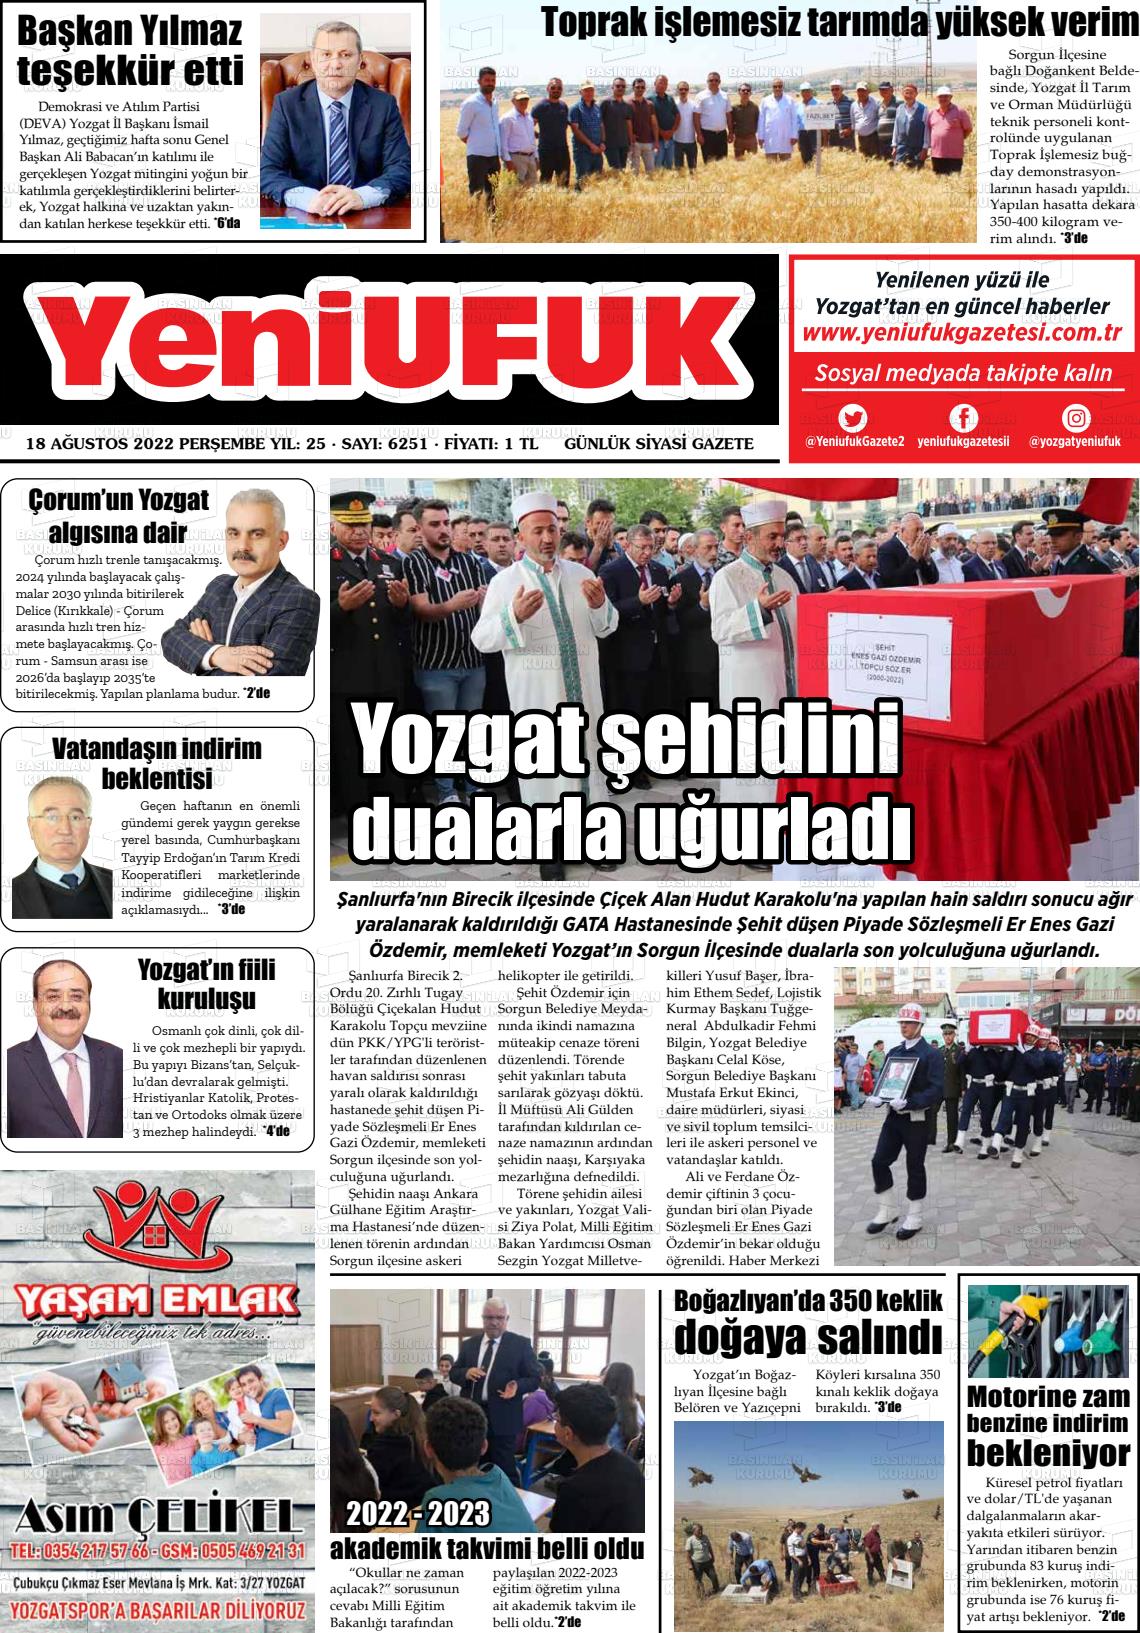 18 Ağustos 2022 Yozgat Yeni Ufuk Gazete Manşeti